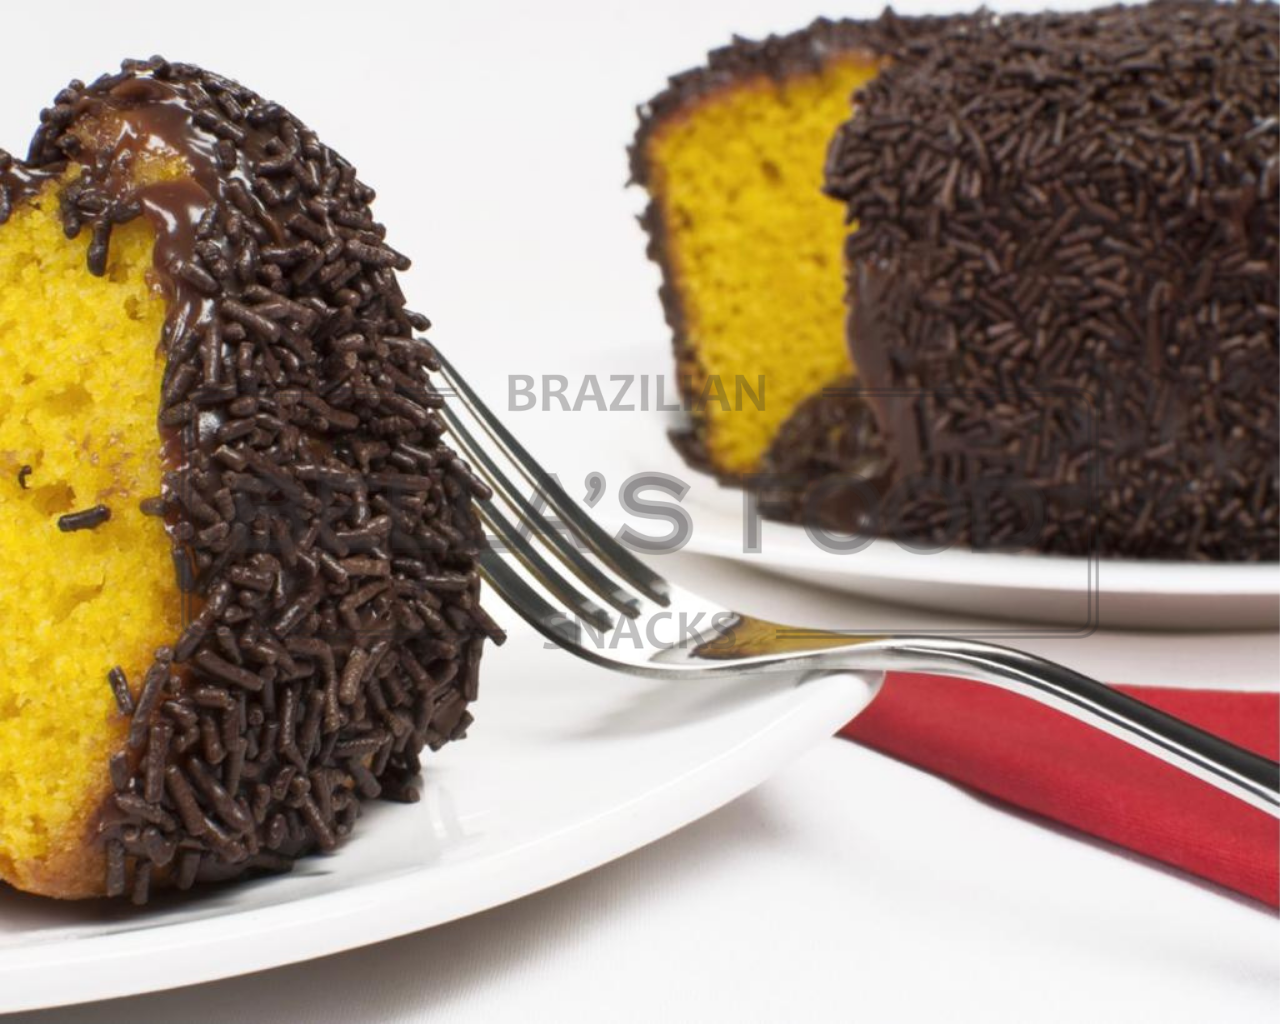 Aggregate 68+ brazilian carrot cake tastemade best - awesomeenglish.edu.vn